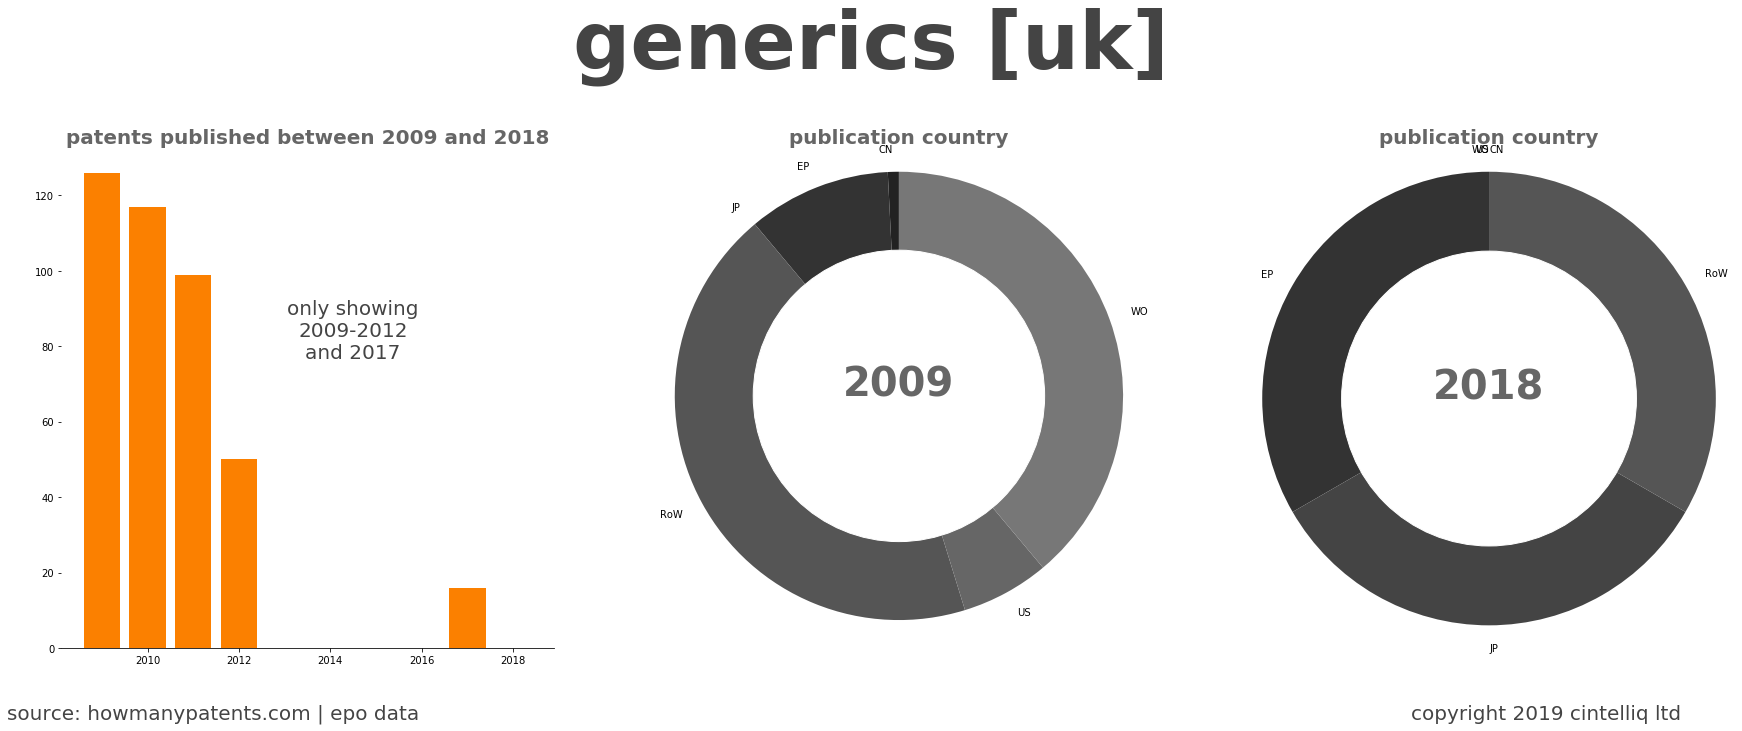 summary of patents for Generics [Uk]